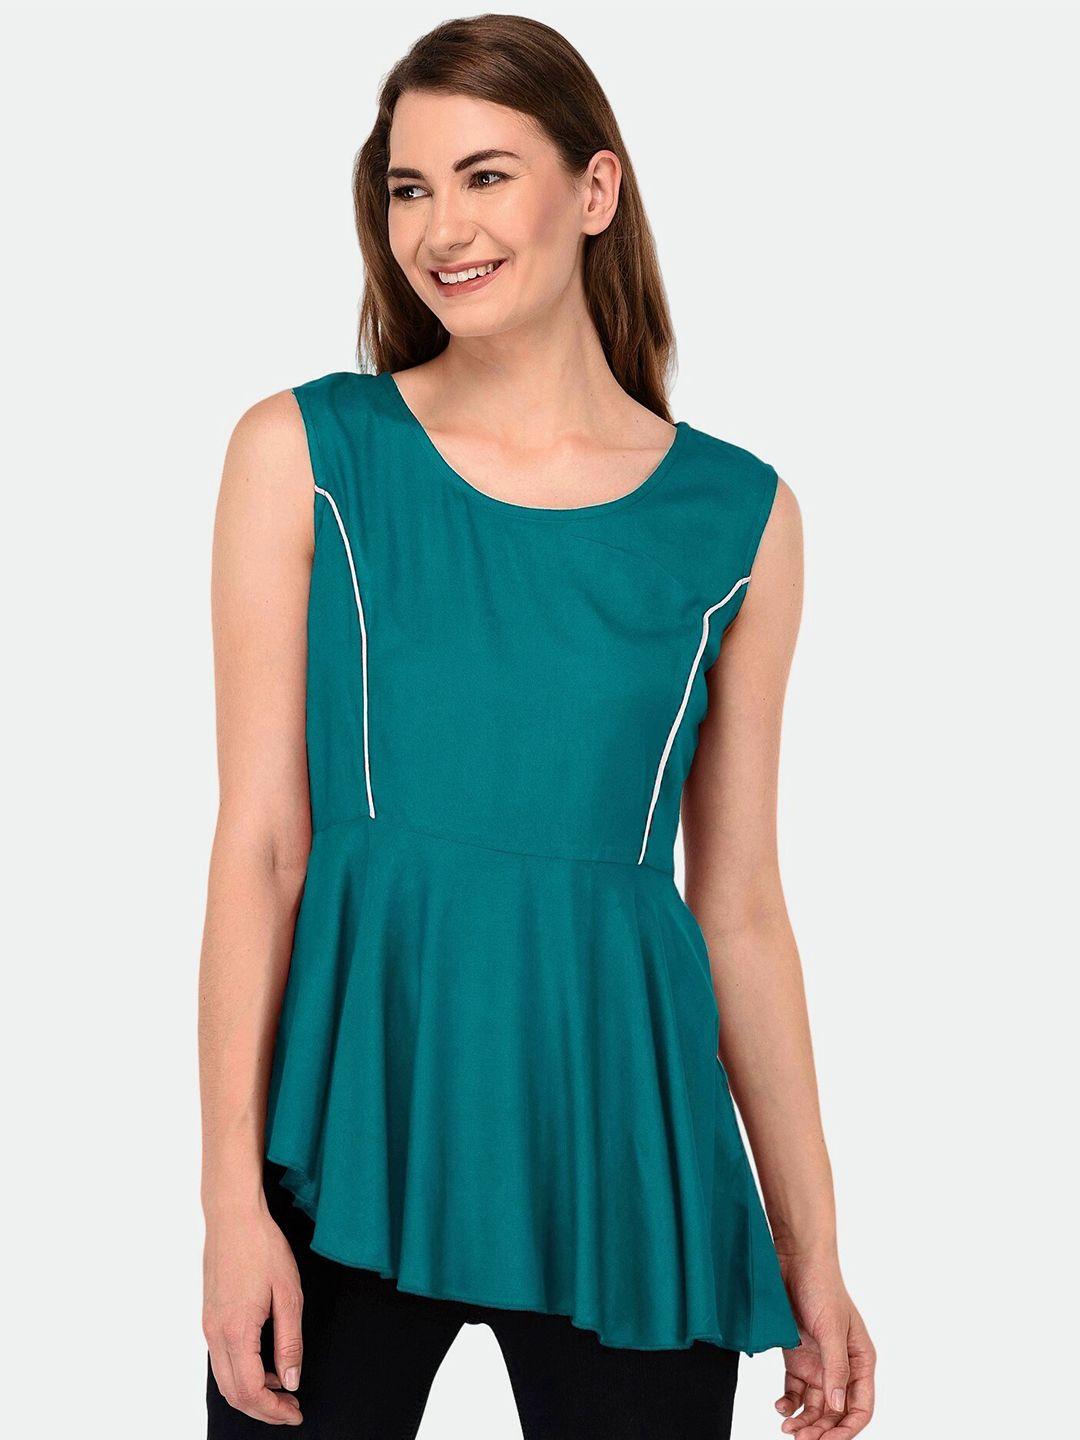 patrorna-women-green-twisted-sleeveless-asymmetric-hem-peplum-top